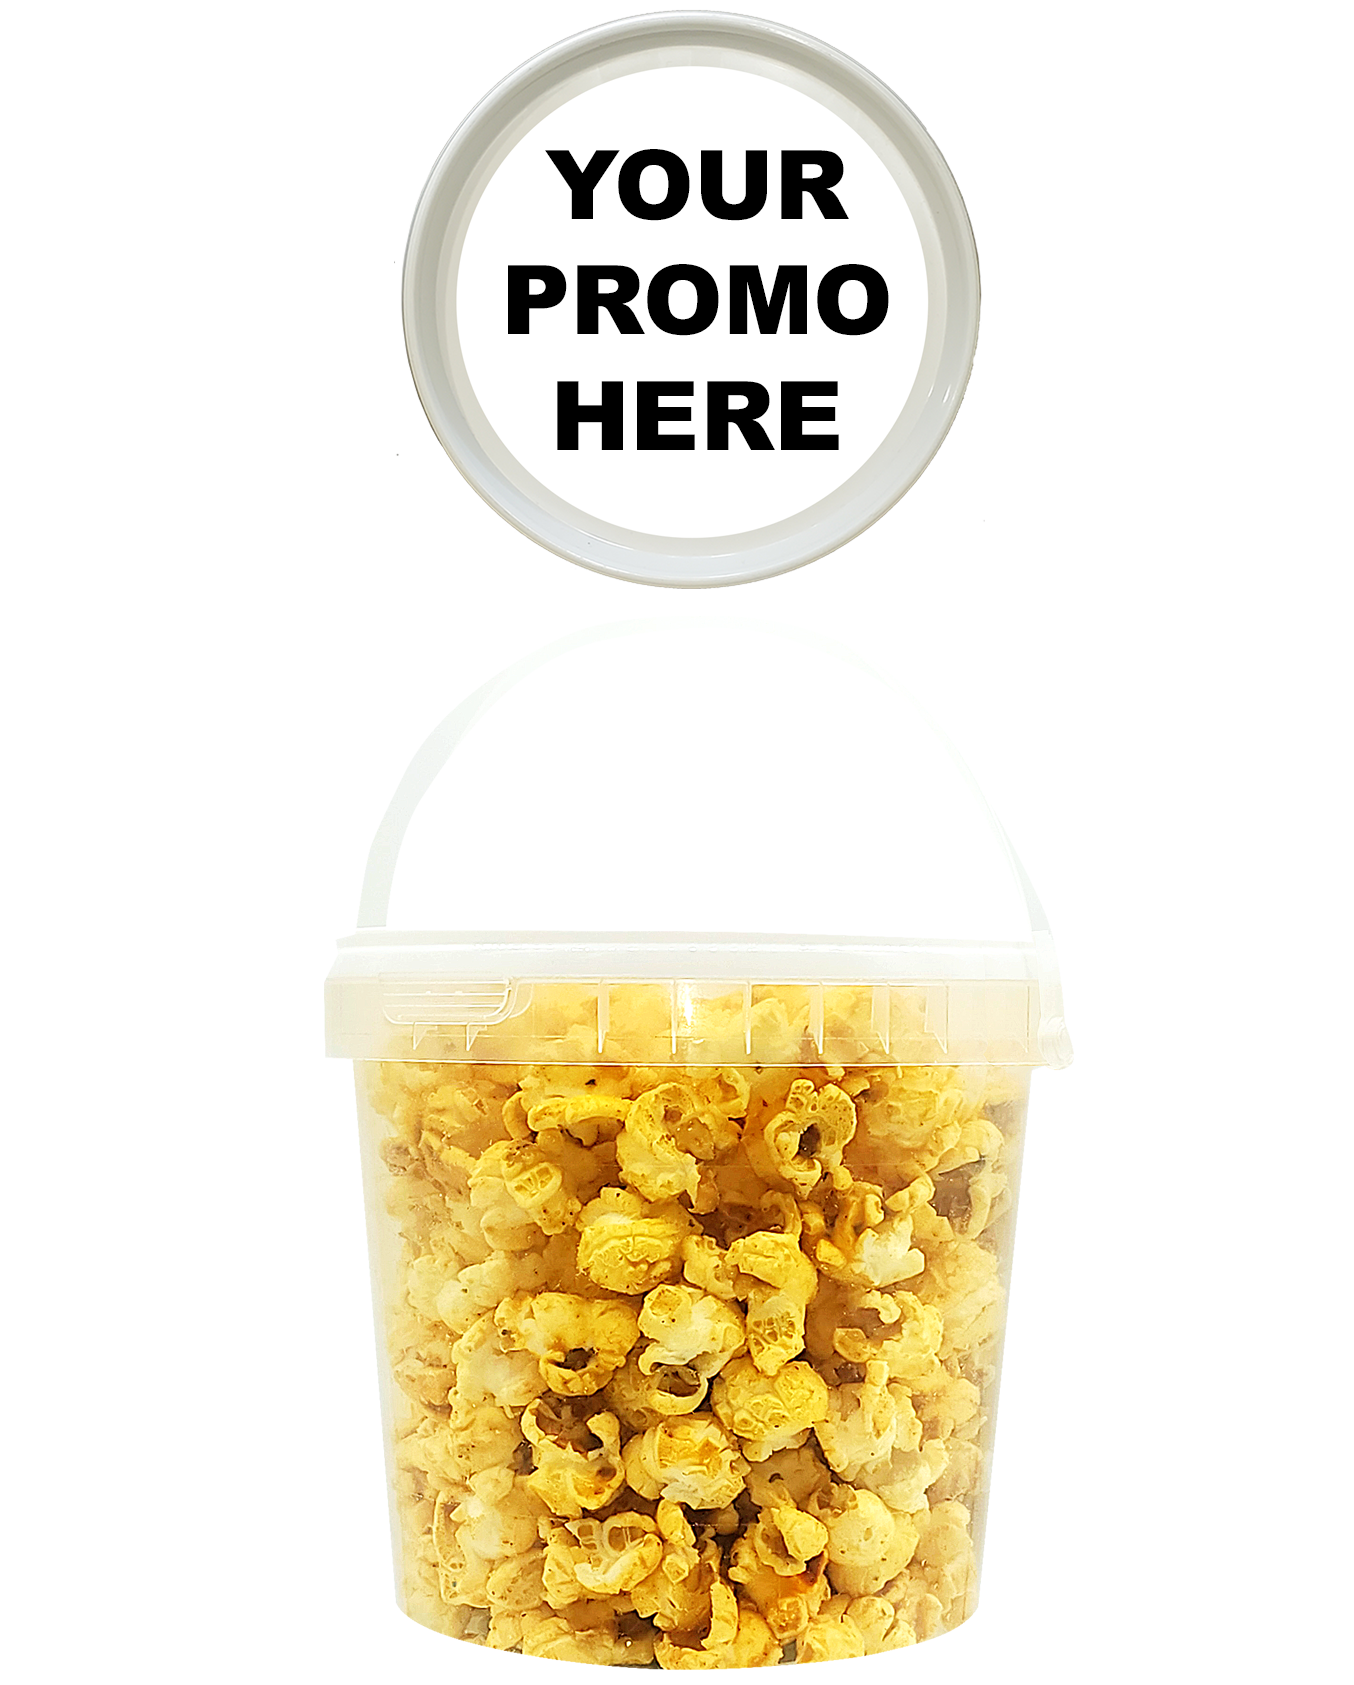 Promo Pop™ - Ragin' Cajun Jumbo (as low as $8.49 per bucket) Case of 12 Price